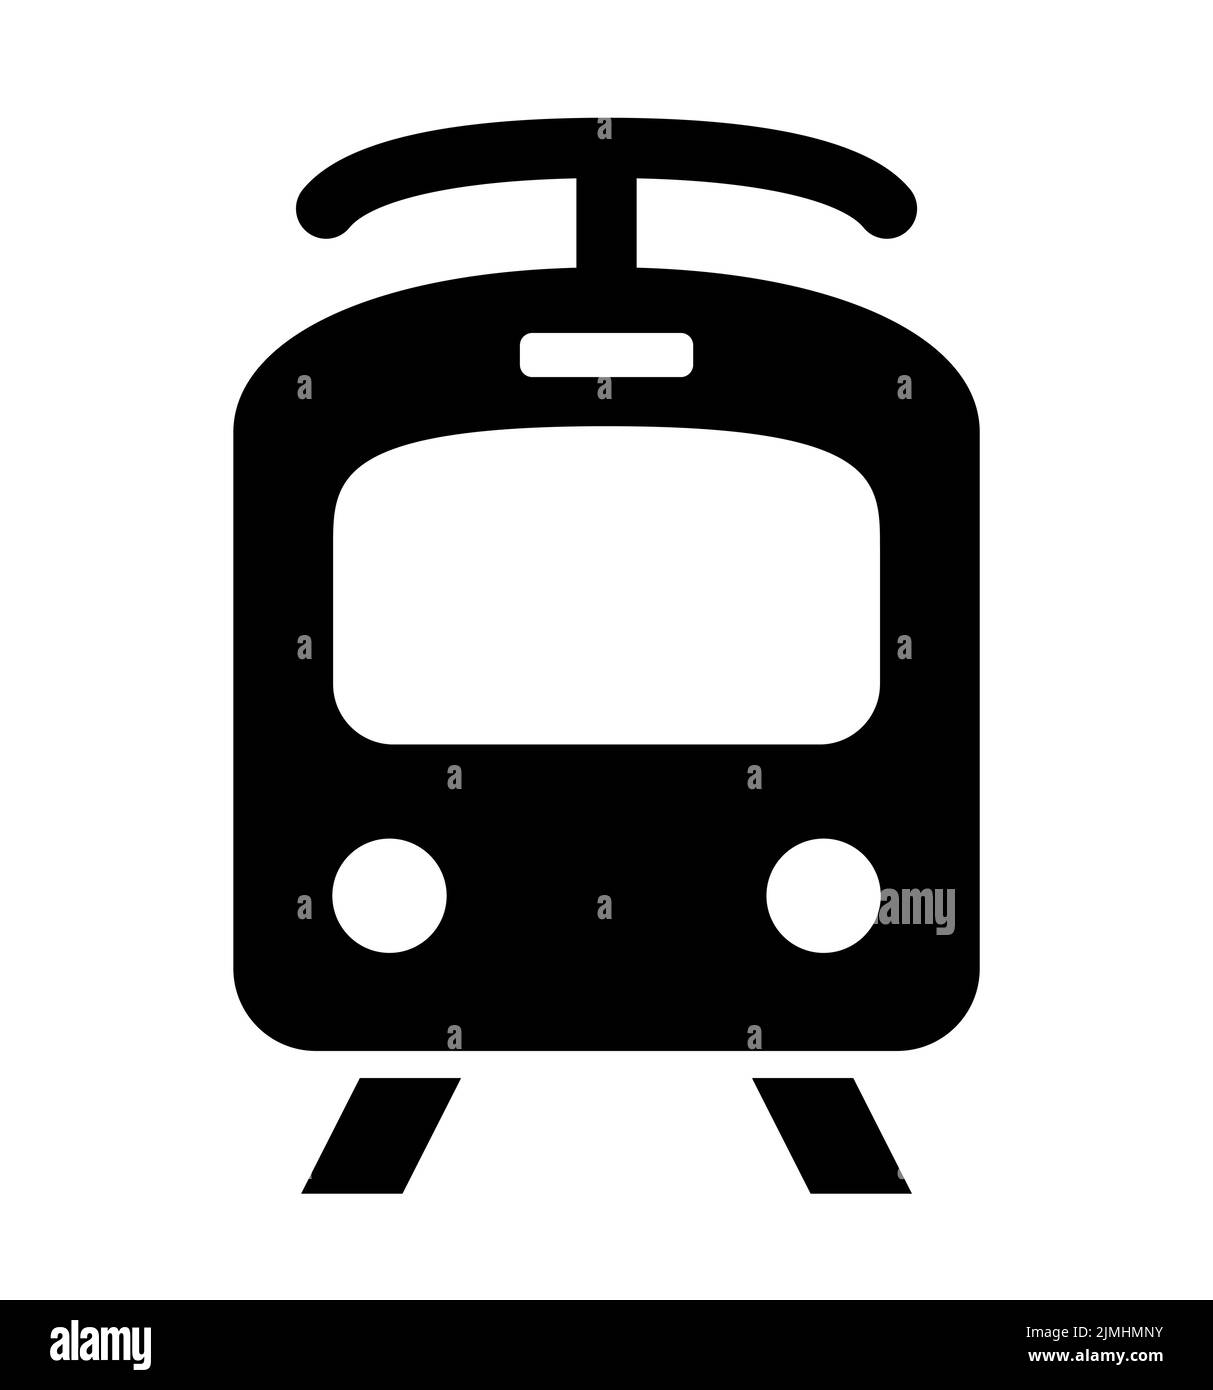 Train or subway vector icon Stock Vector